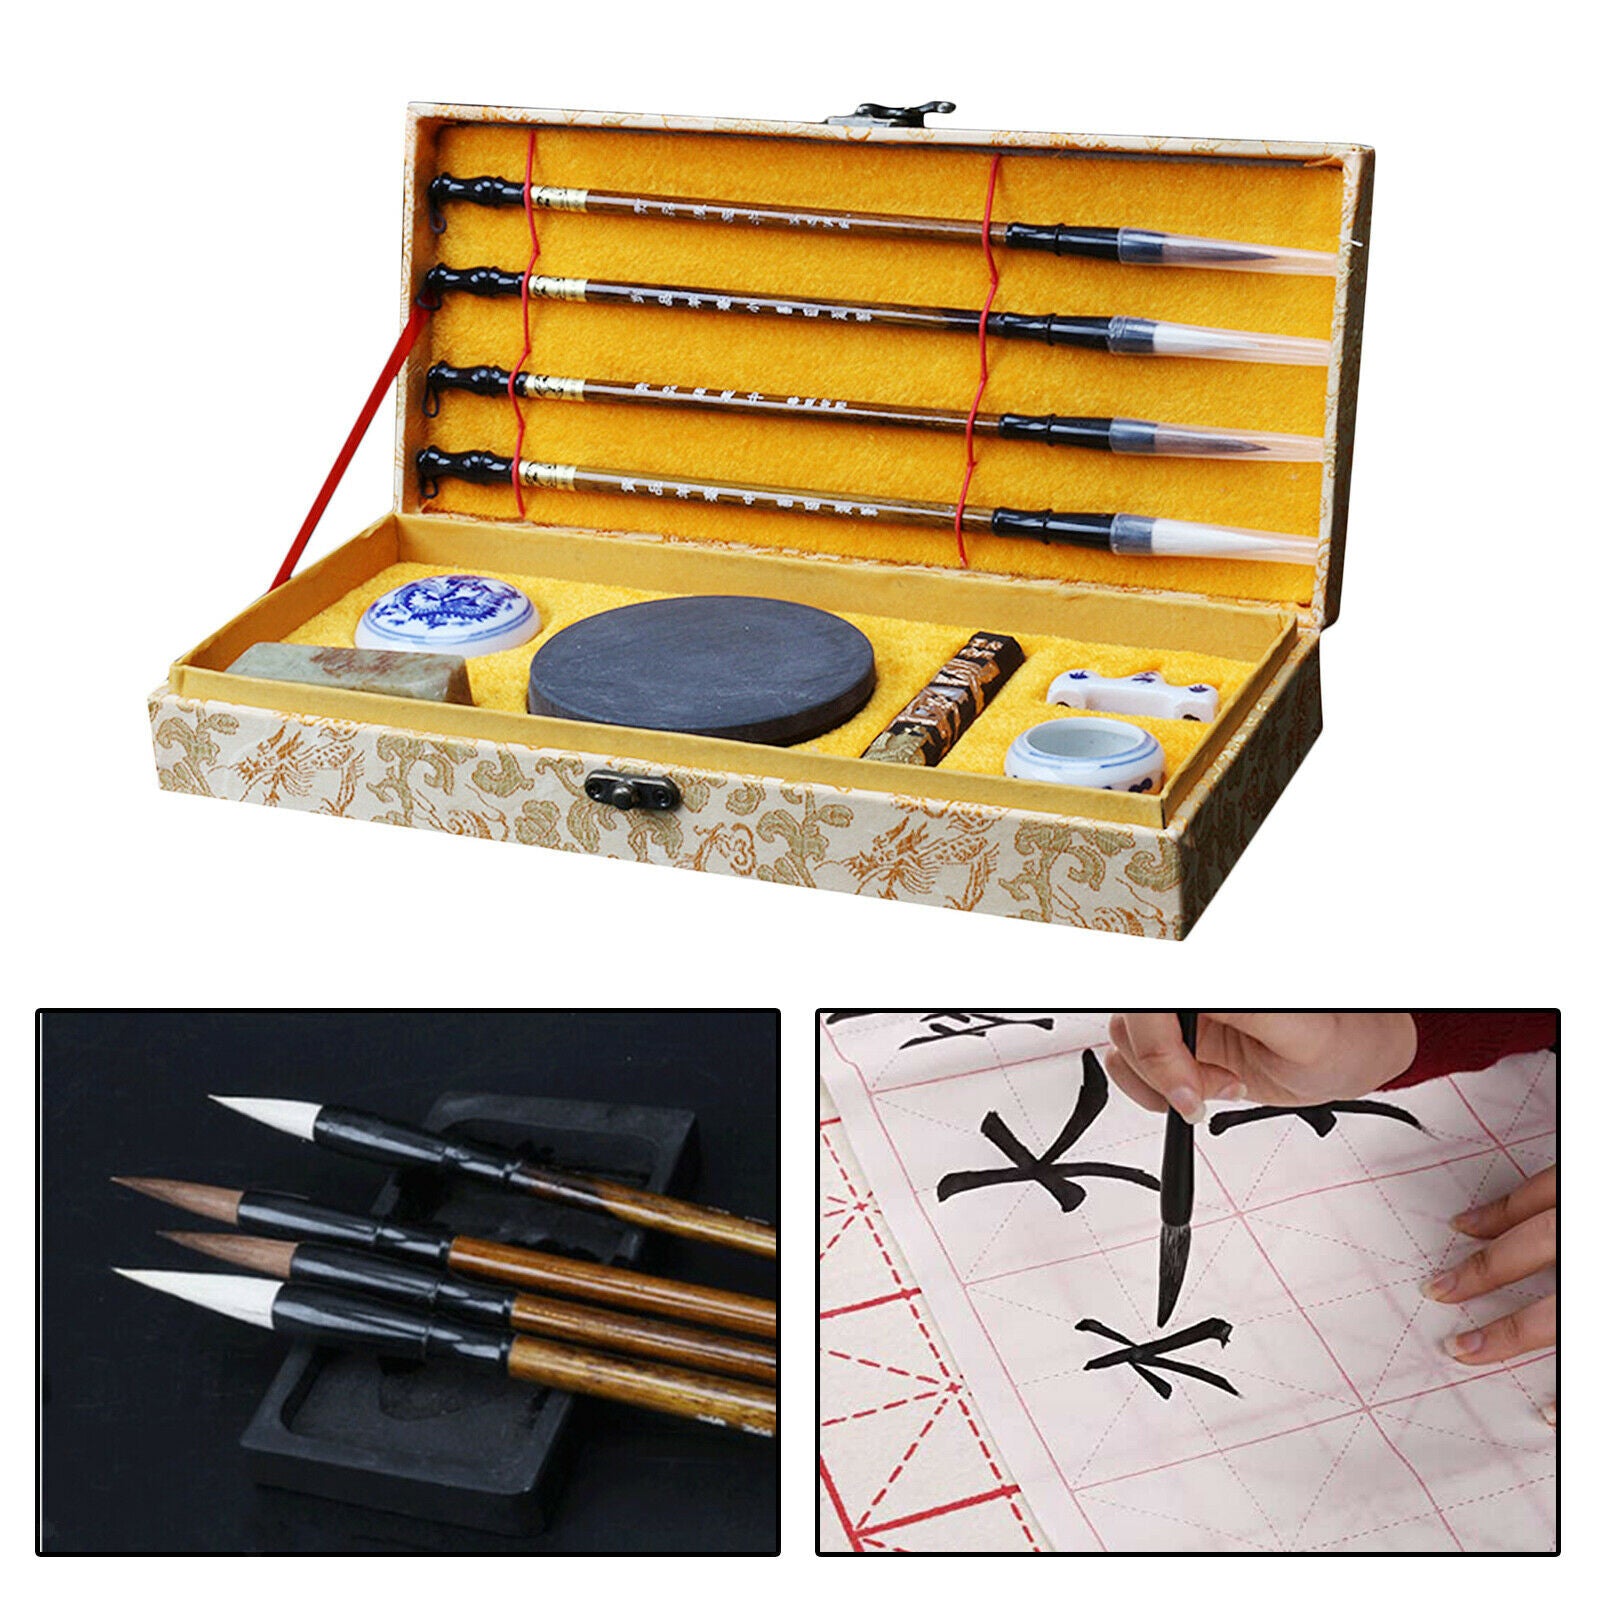 11 Professional Chinese Calligraphy Writing Drawing Brush Ink Stick Kit